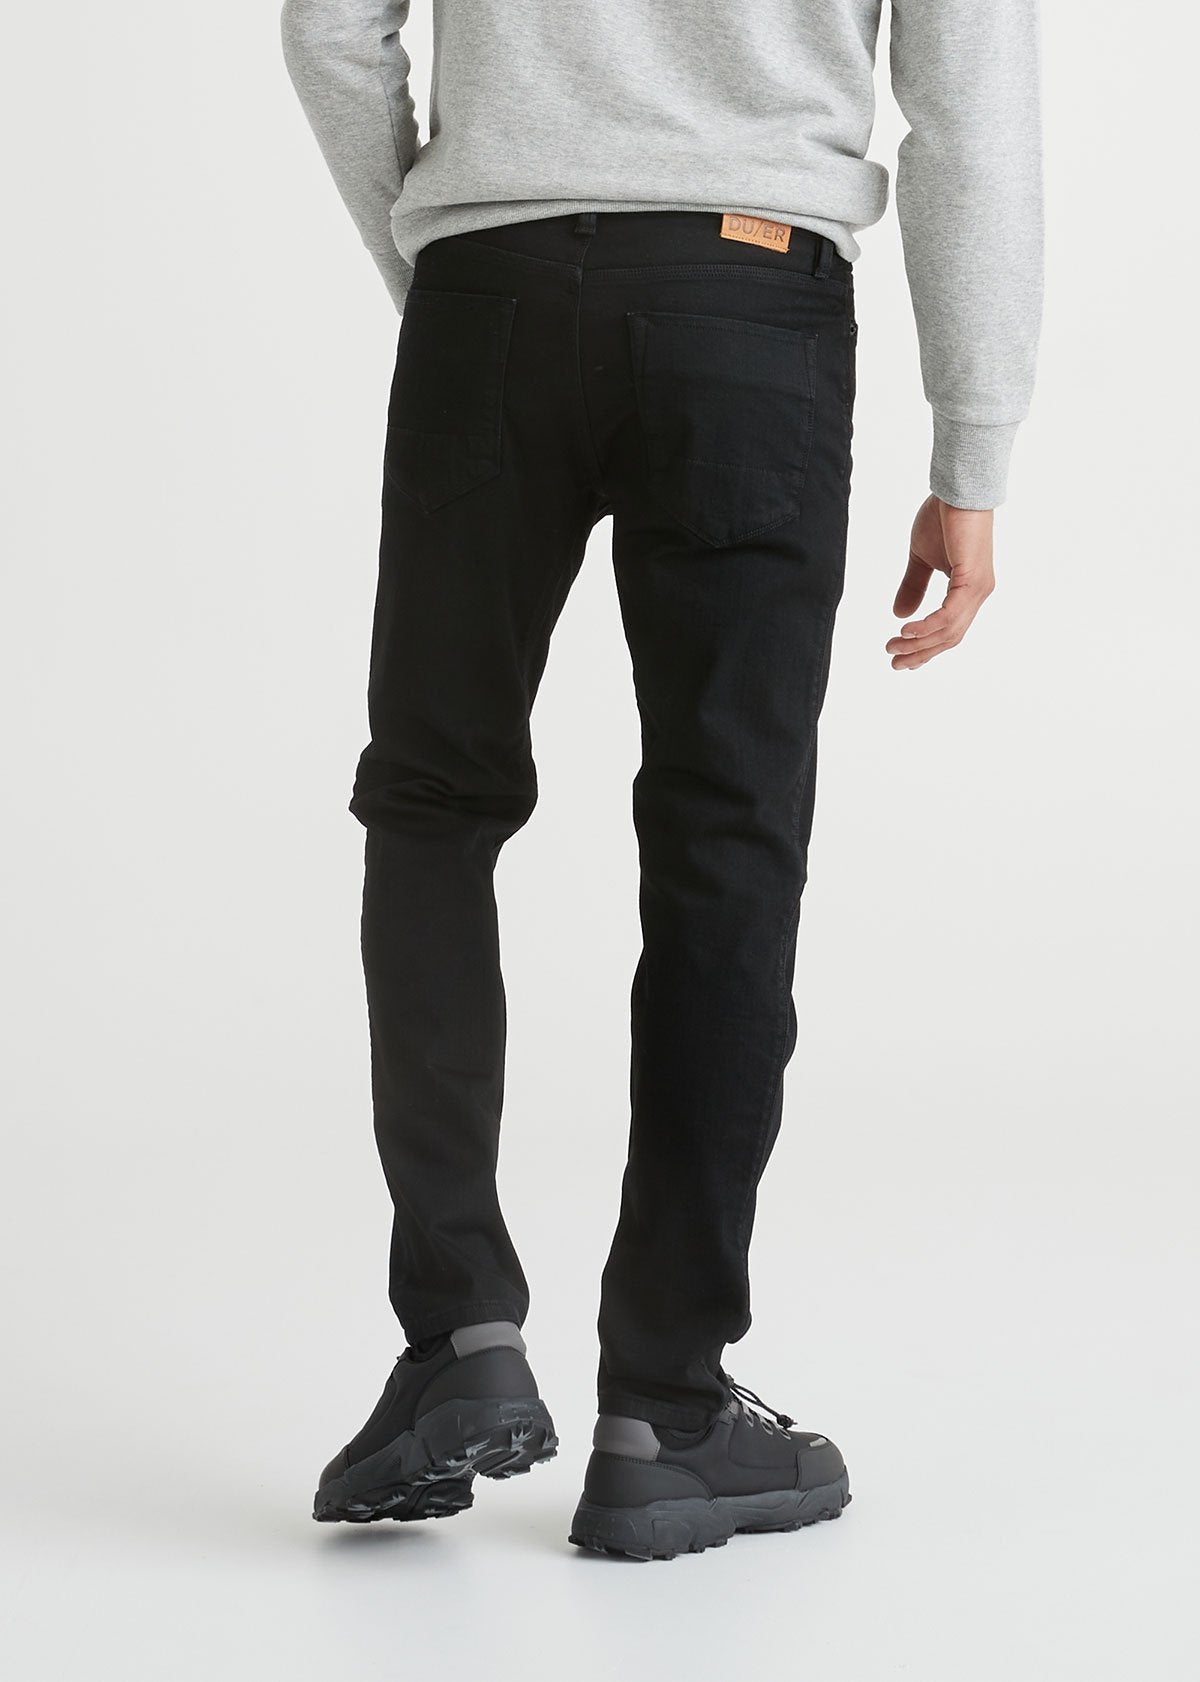 mens black slim fit warm stretch jeans back